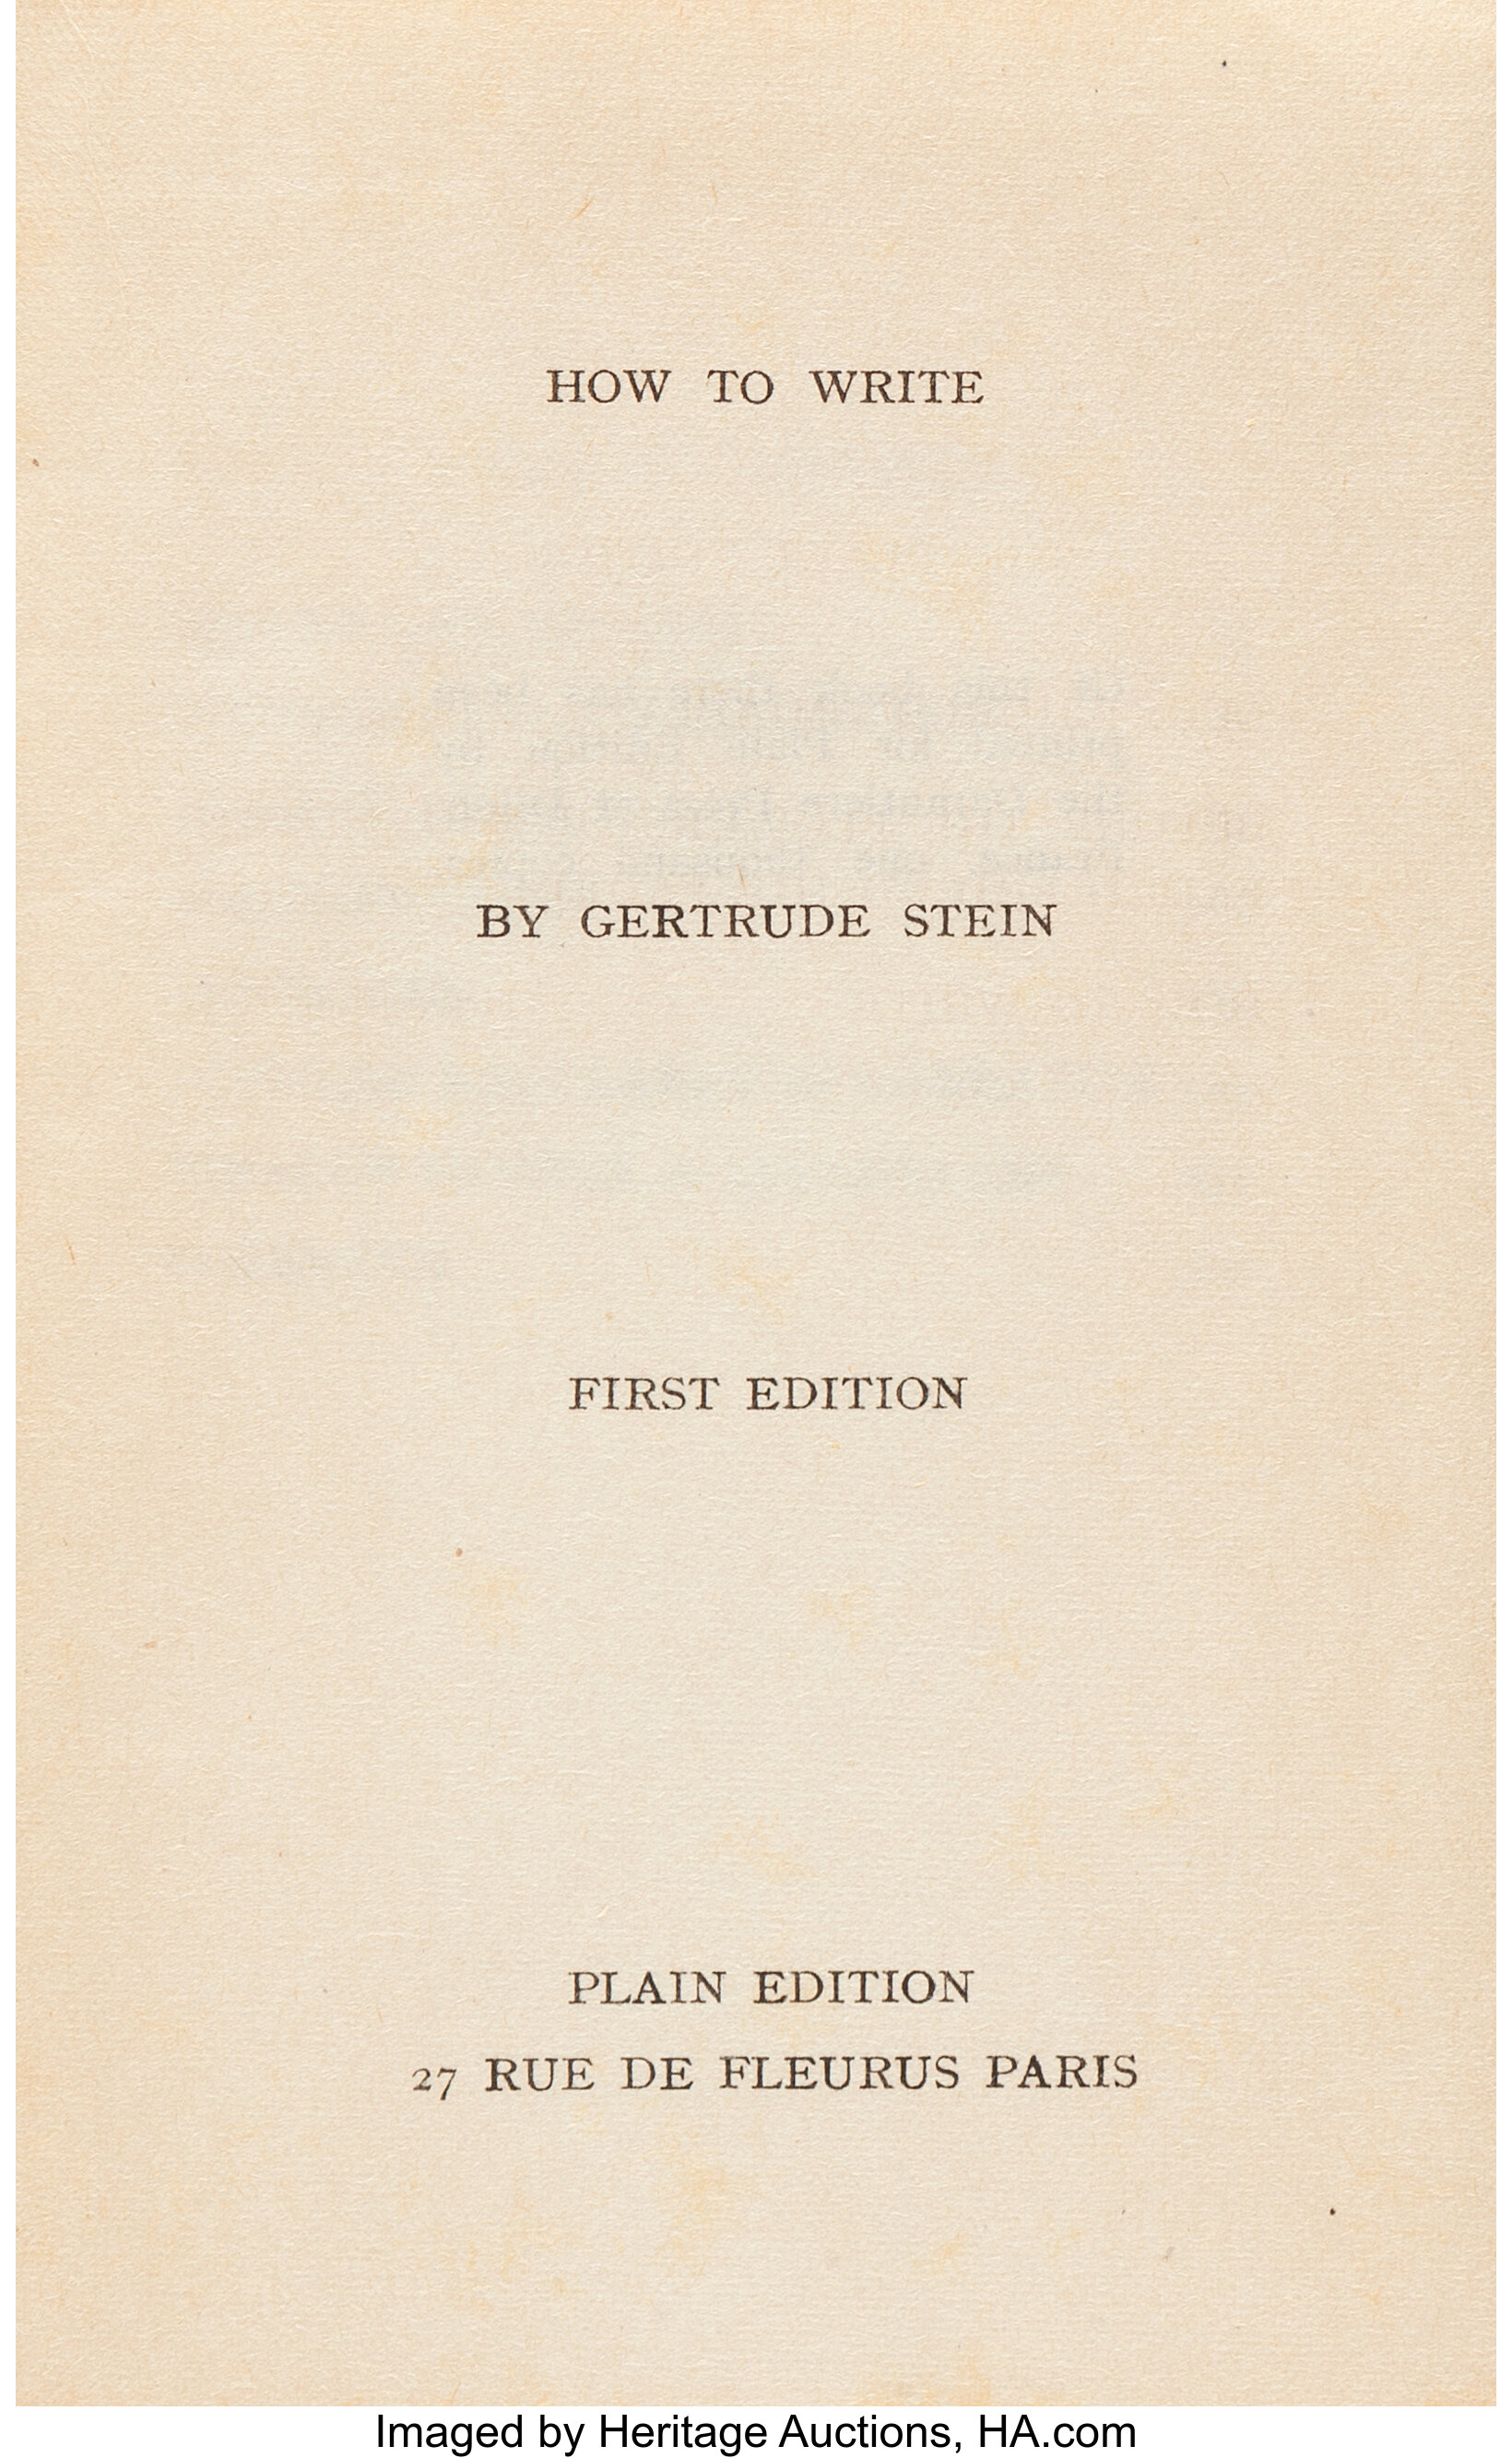 Gertrude Stein. How to Write. Paris: Plain Edition, [17]. First